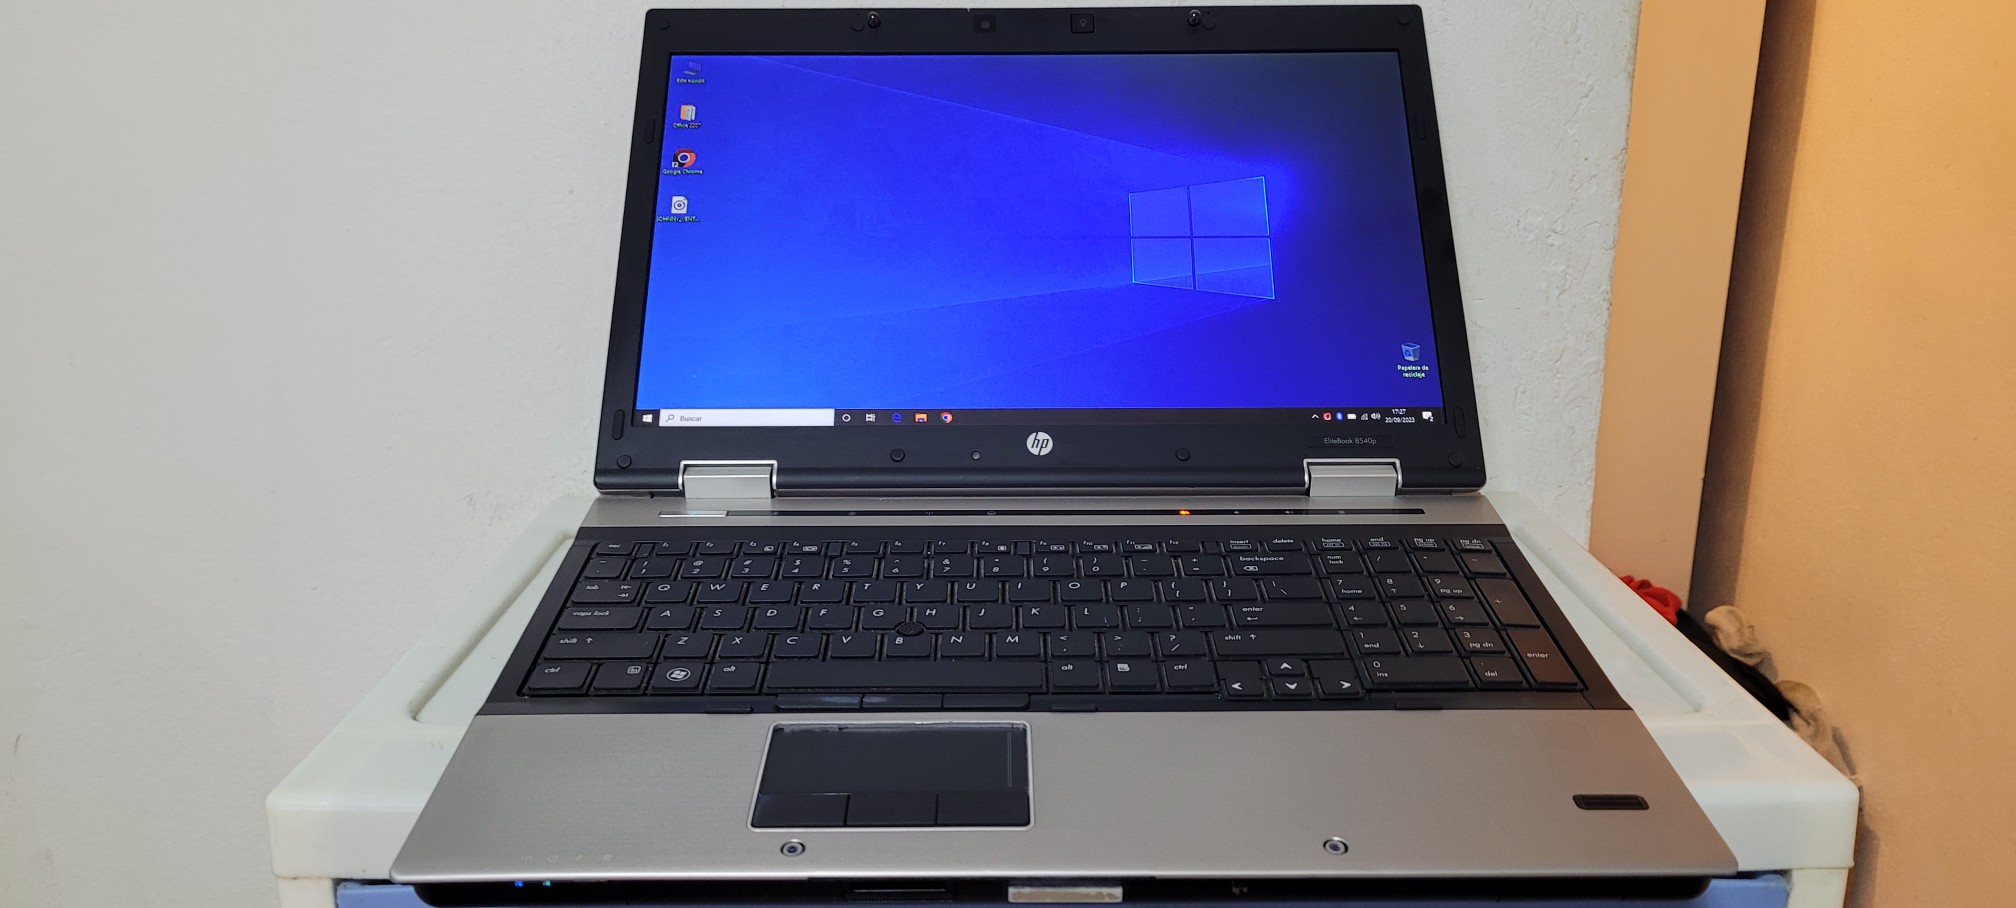 computadoras y laptops - Laptop hp ElitebooK 17 Pulg Core i7 2.8ghz Ram 8gb Disco SSD 128GB Nvidea 4gb